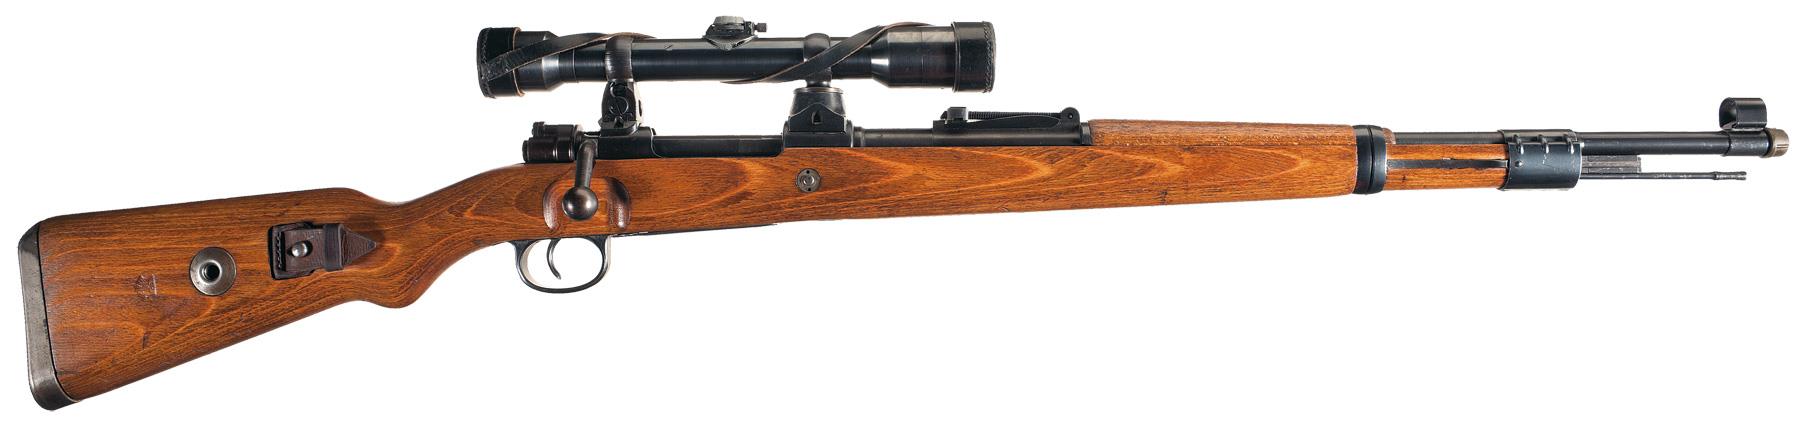 Mauser 98k Rifle 8 Mm Rock Island Auction 7406